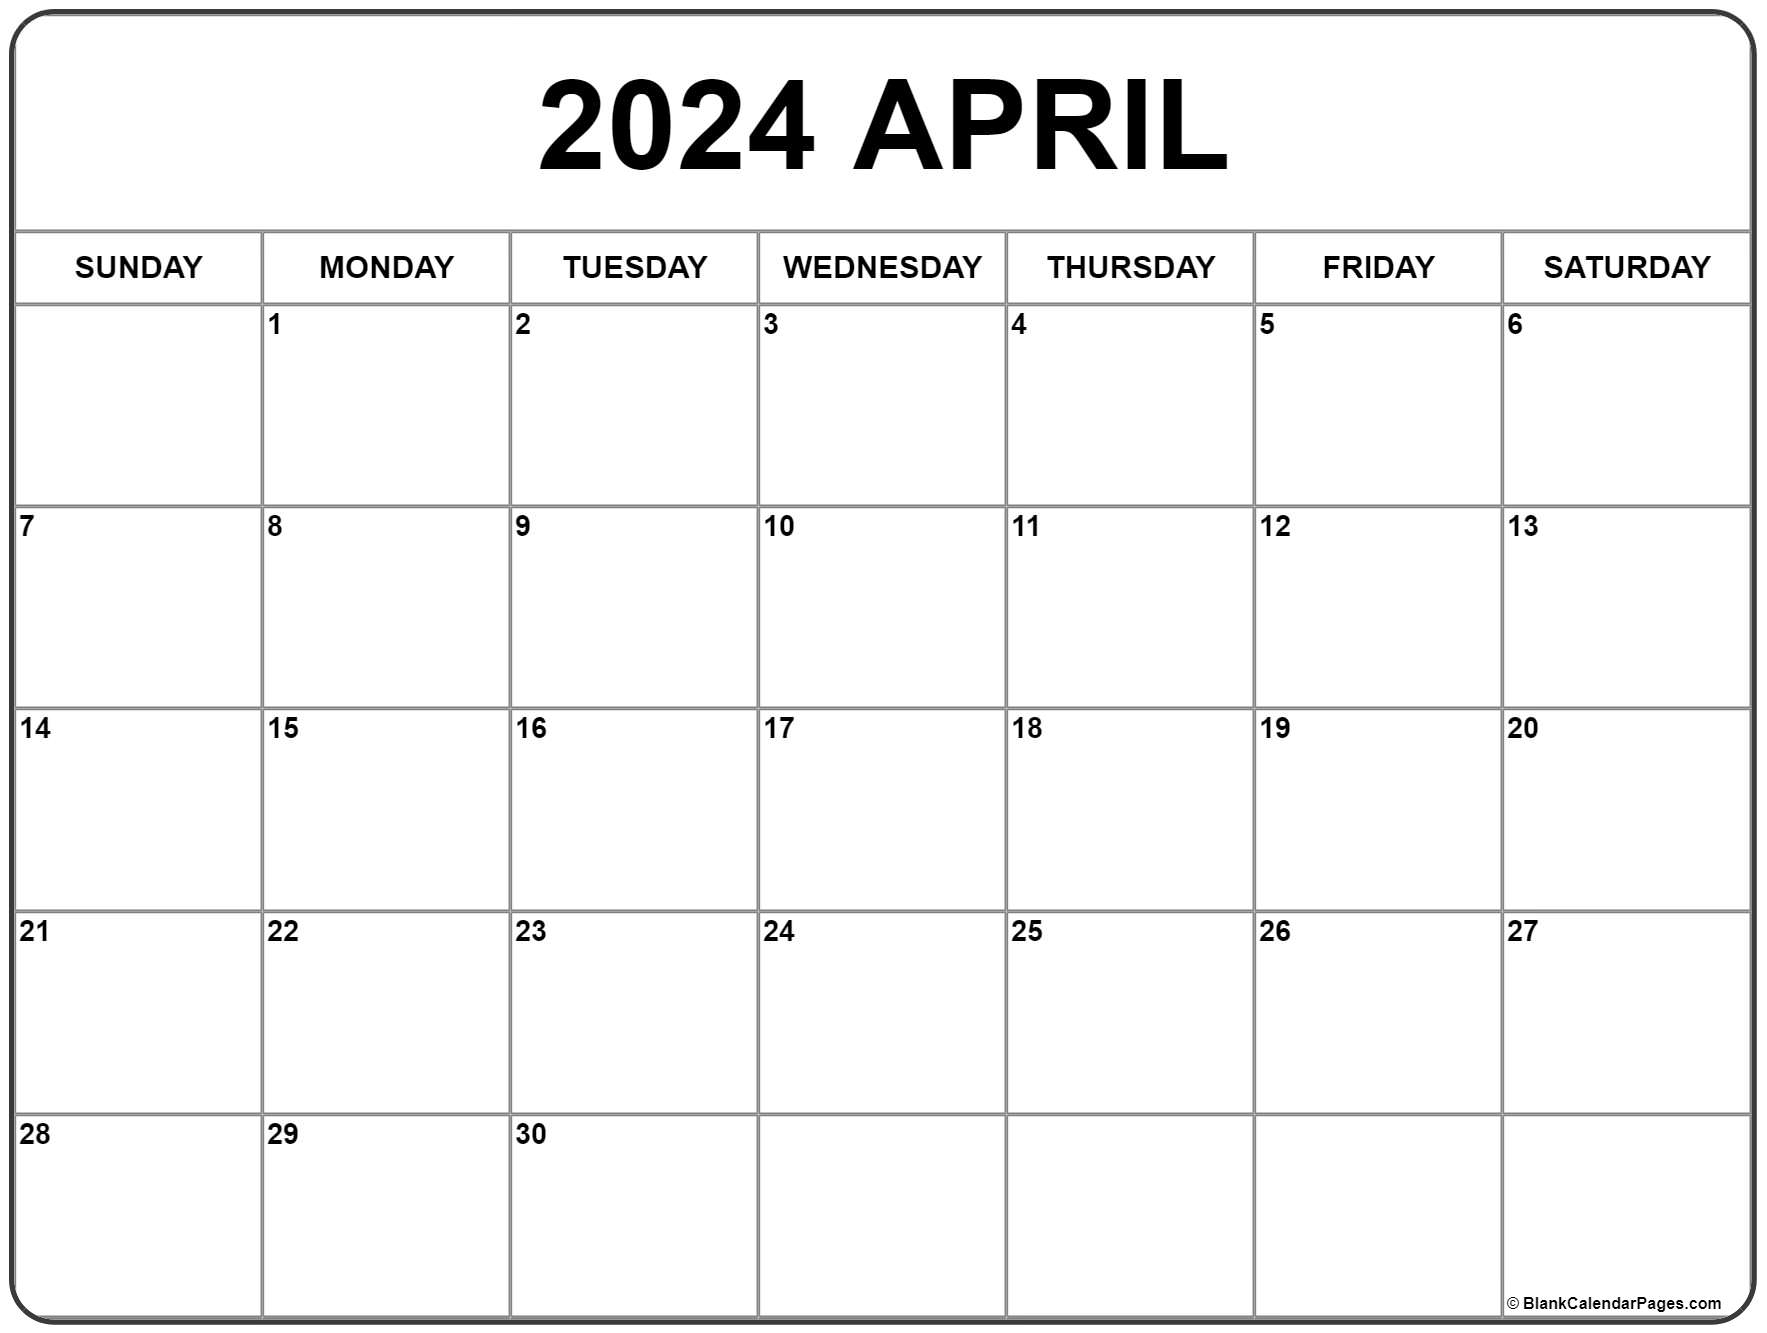 April 2024 Calendar | Free Printable Calendar within April 2024 Blank Calendar